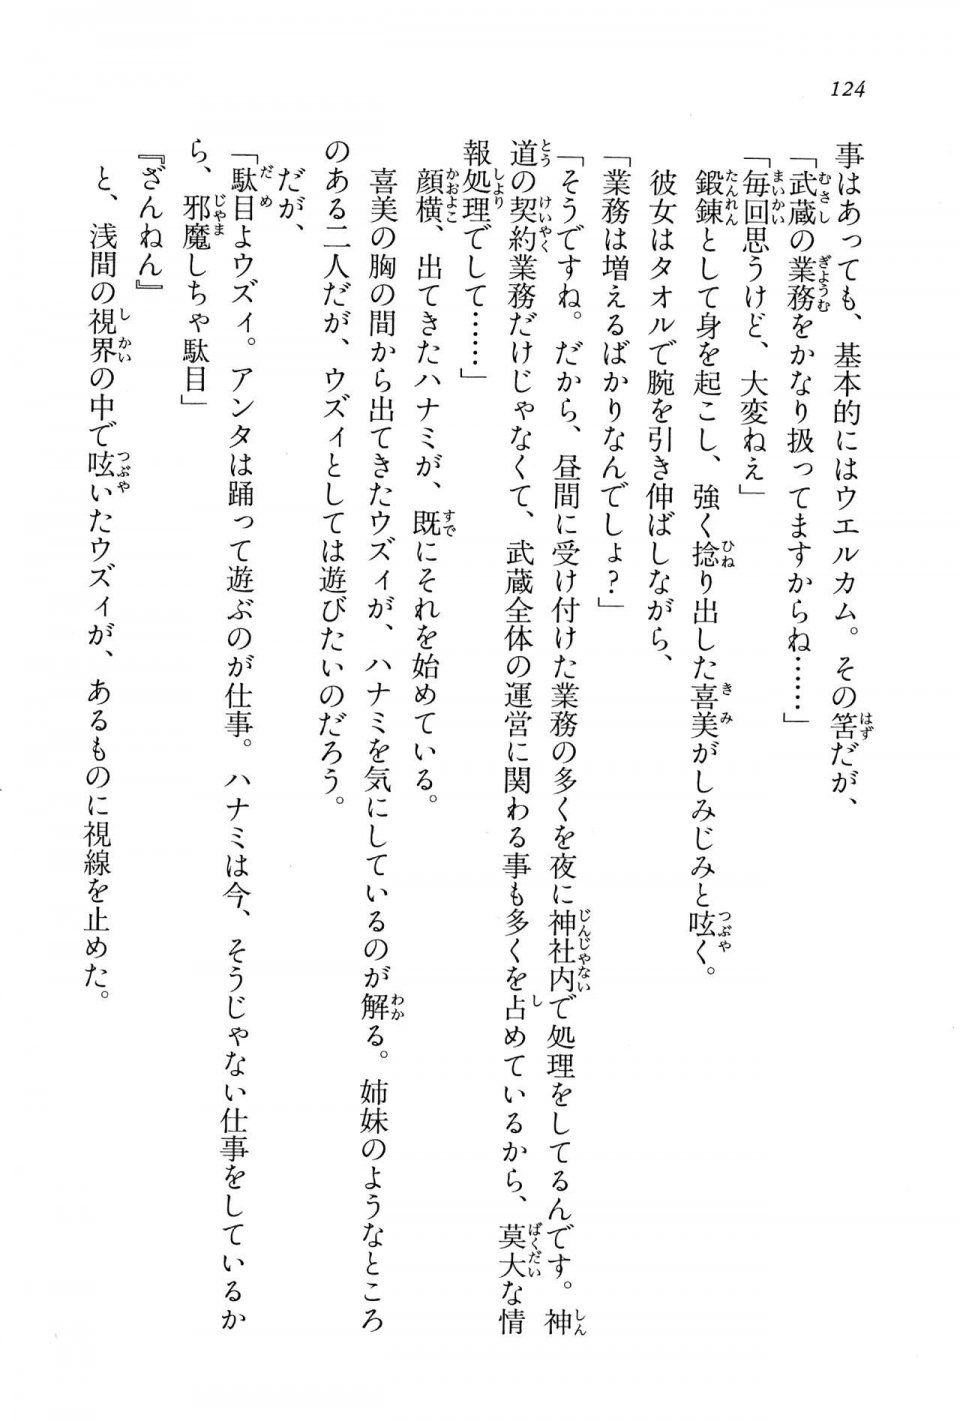 Kyoukai Senjou no Horizon BD Special Mininovel Vol 6(3B) - Photo #128